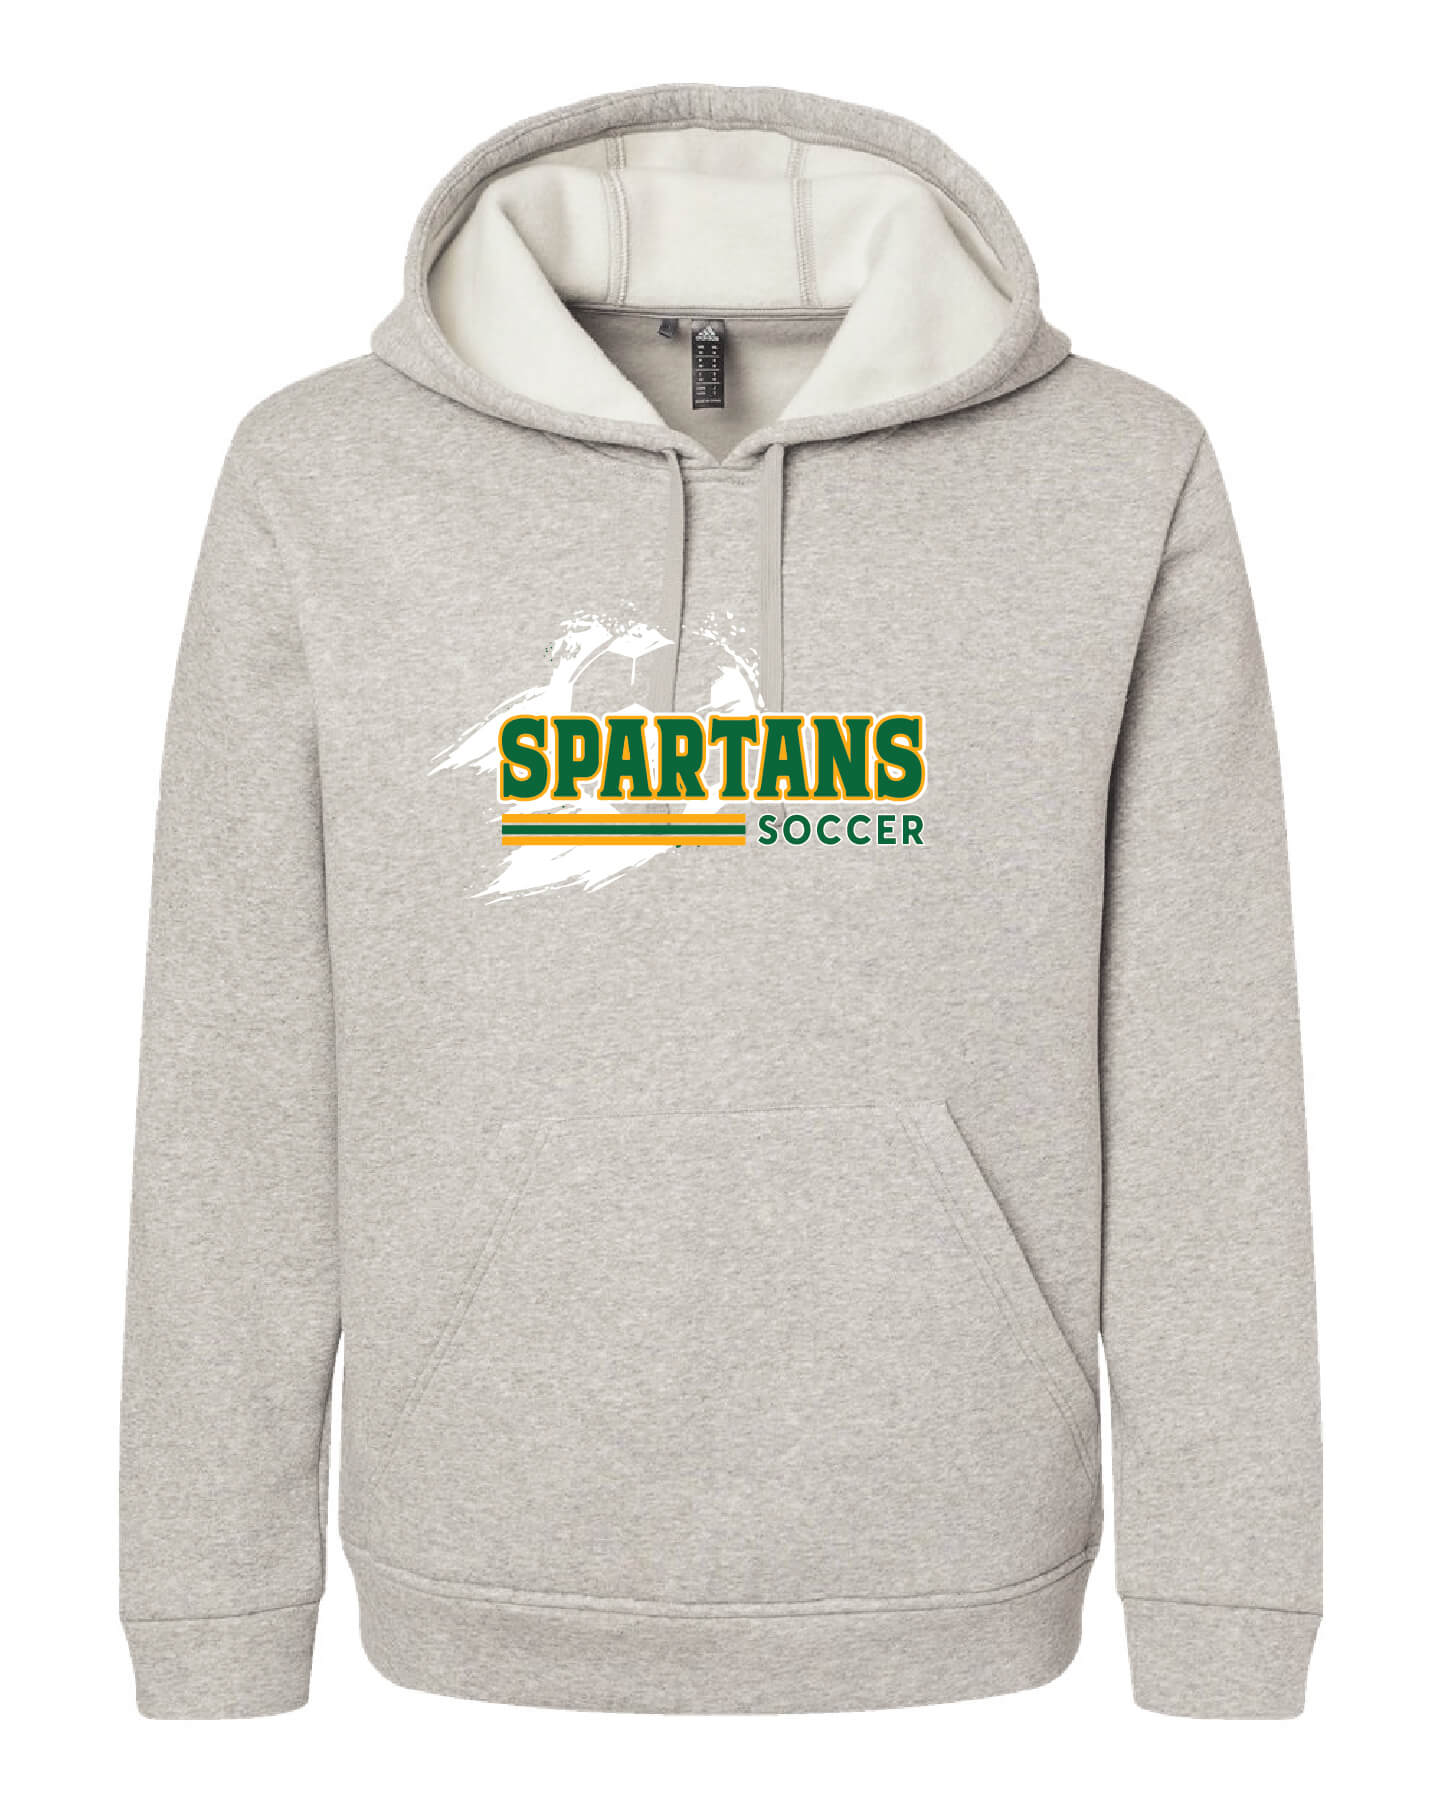 Spartans Fleece Hooded Sweatshirt gray front